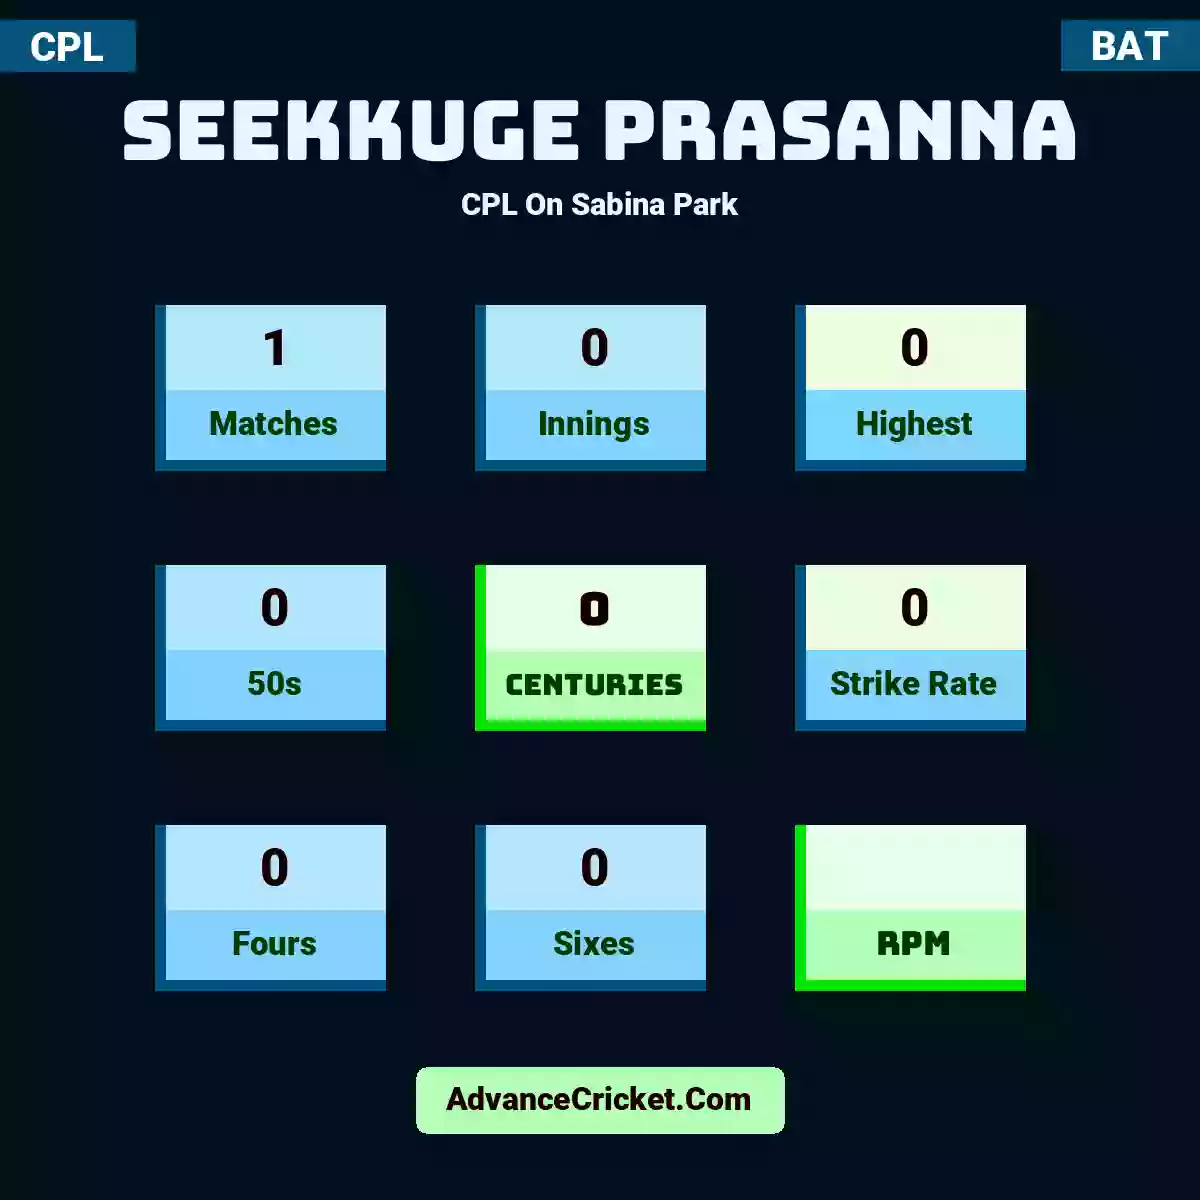 Seekkuge Prasanna CPL  On Sabina Park, Seekkuge Prasanna played 1 matches, scored 0 runs as highest, 0 half-centuries, and 0 centuries, with a strike rate of 0. S.Prasanna hit 0 fours and 0 sixes.